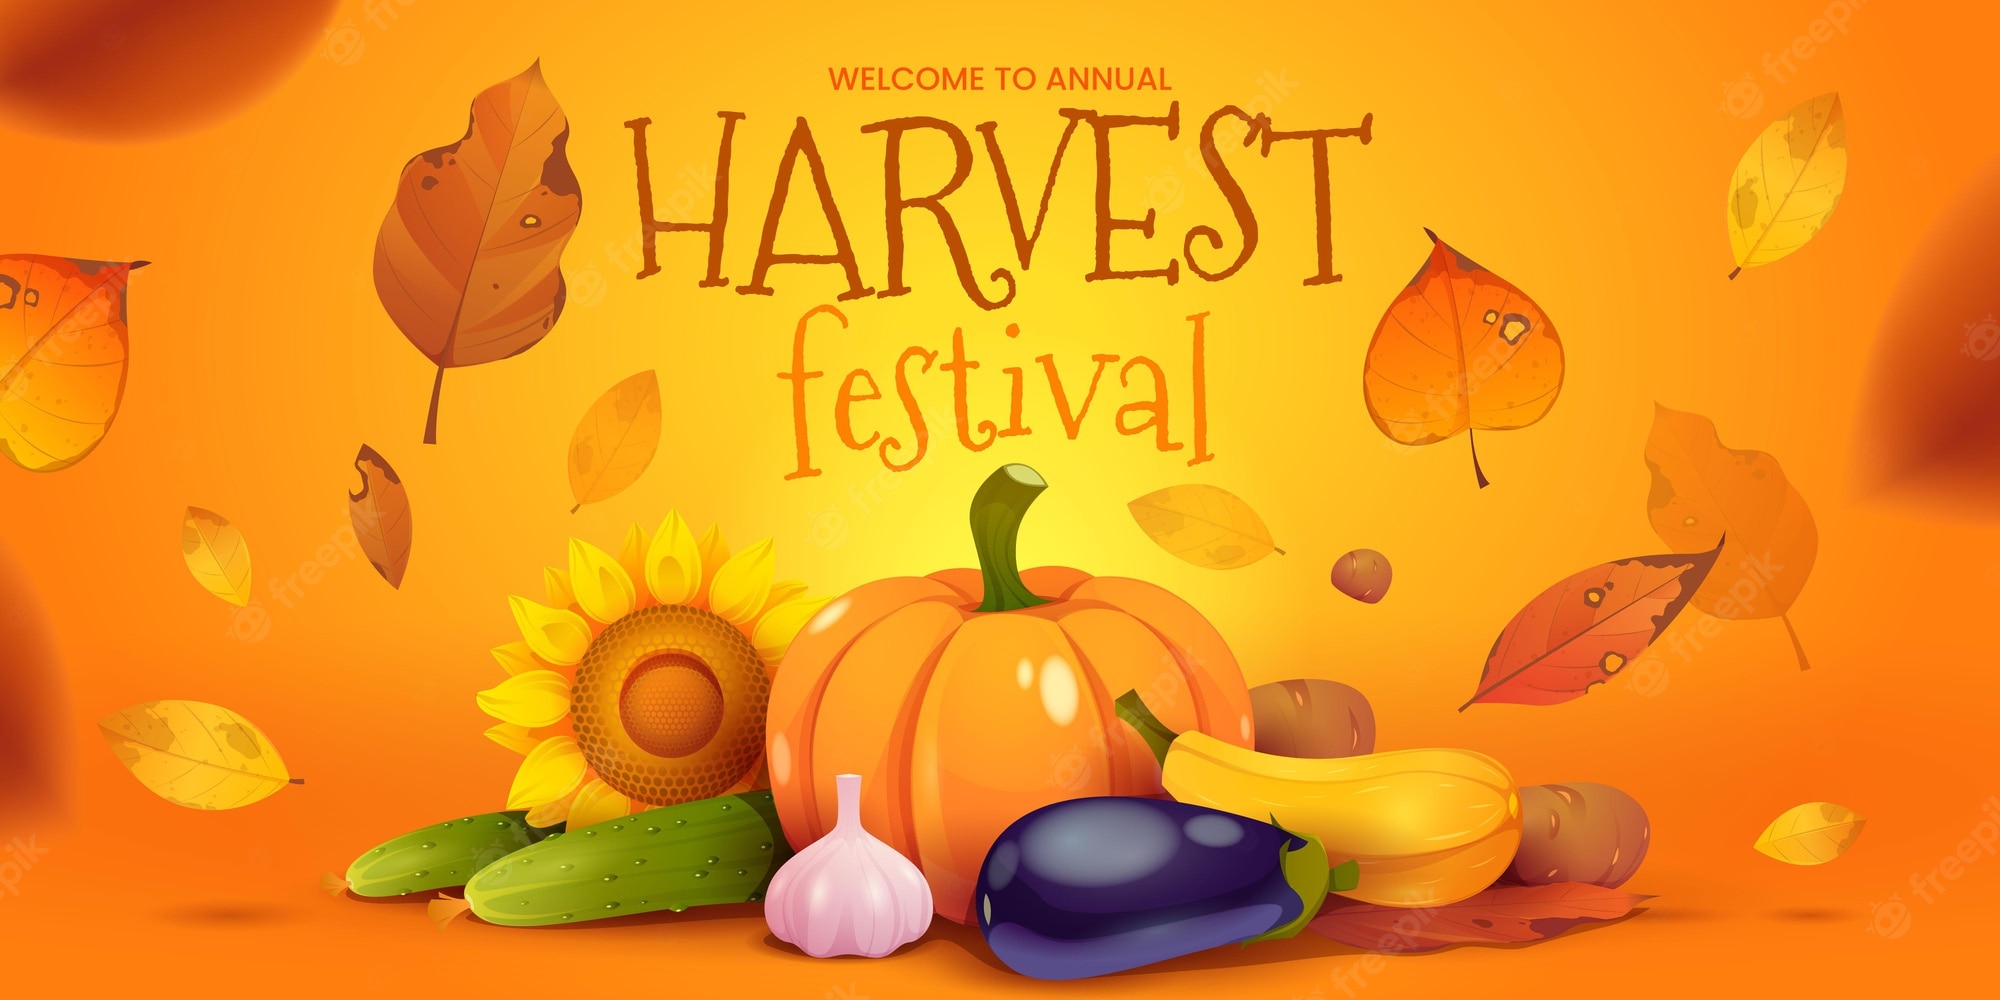 Harvest Image. Free Vectors, & PSD